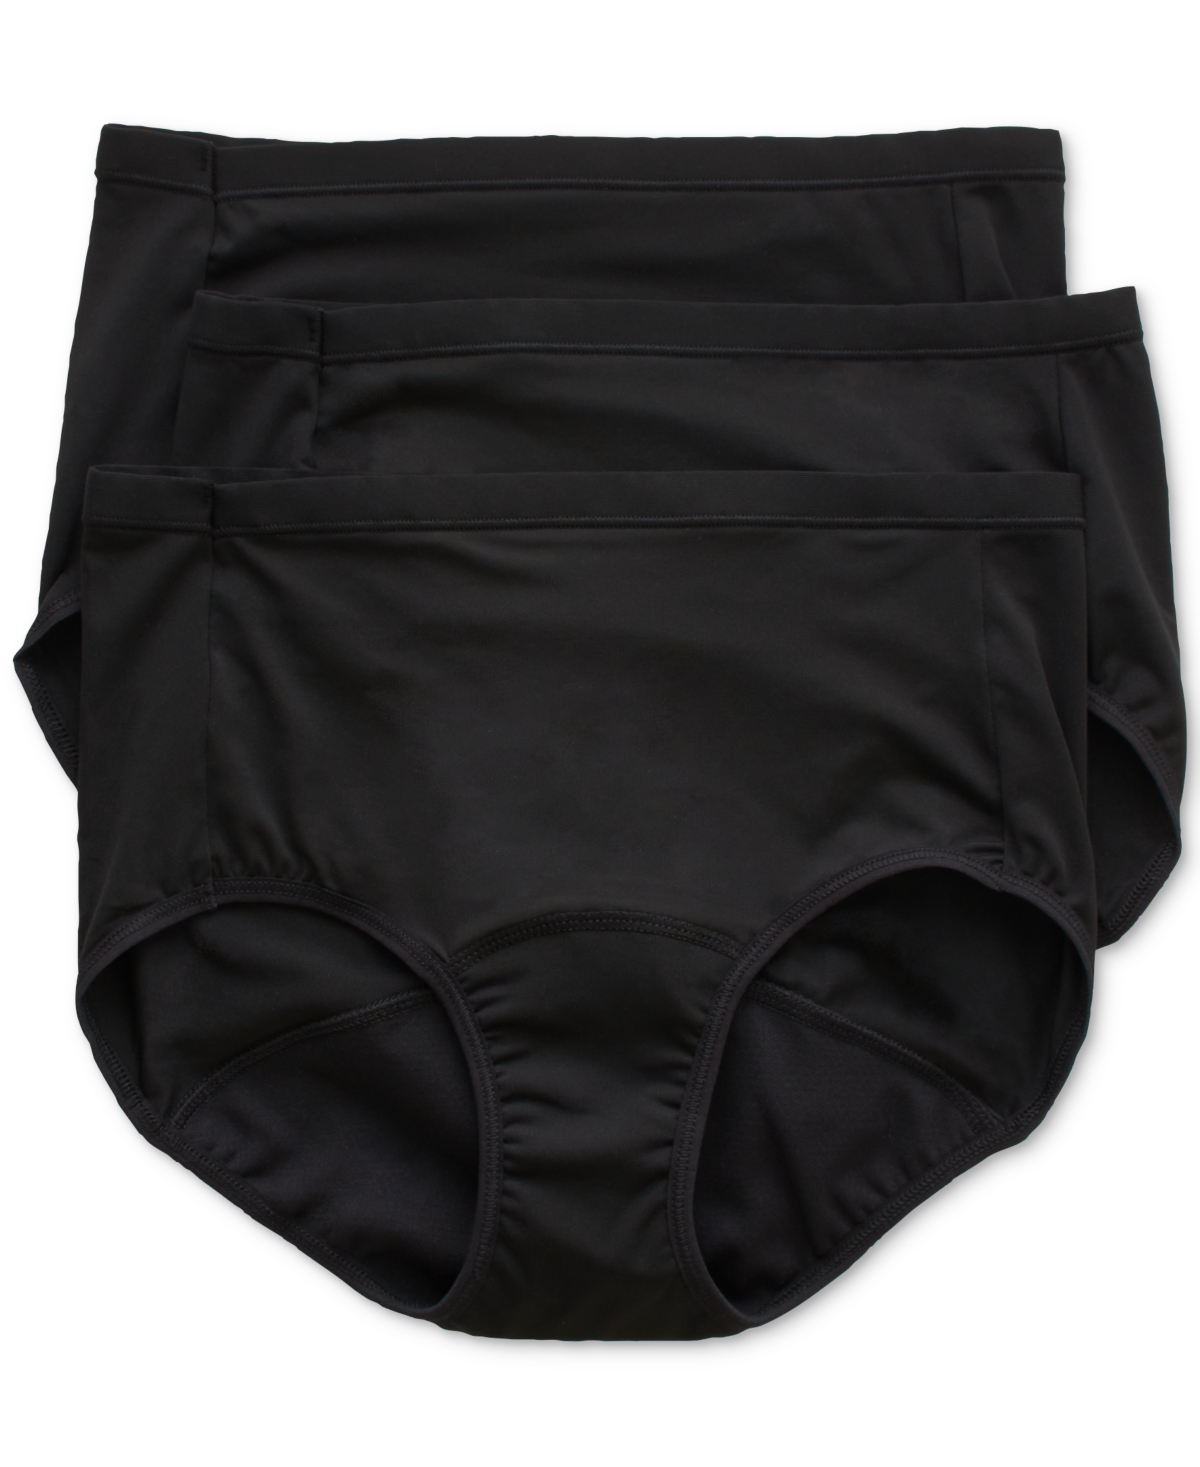 Women's 3-Pk. Light Period Brief Underwear 40FDL3 - Black, Gloss, In the Navy